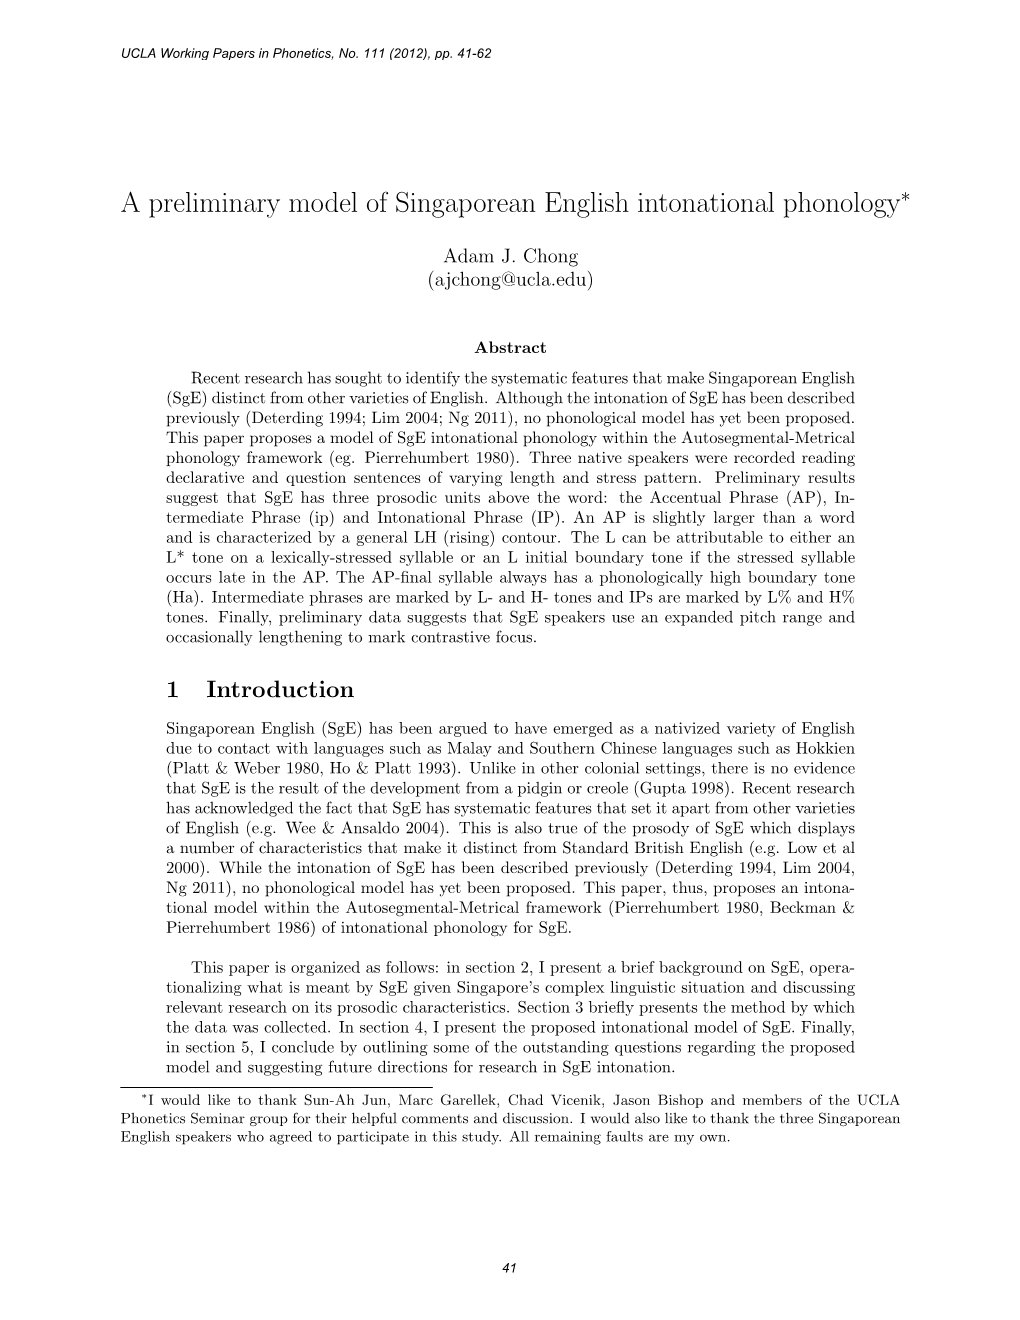 A Preliminary Model of Singaporean English Intonational Phonology∗